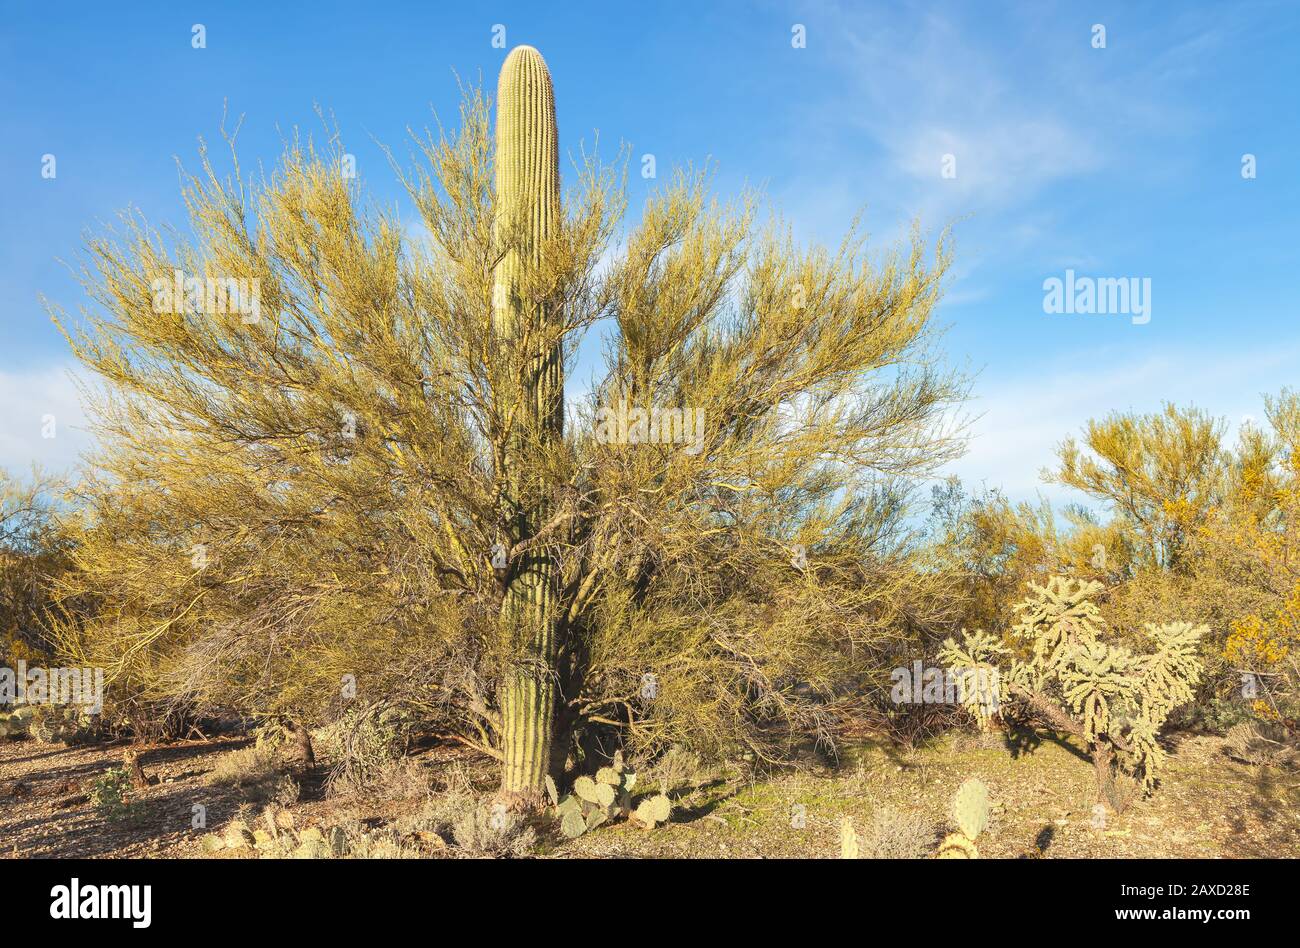 A saguaro cactus,C. gigantea, grows through a little-leaved Palo Verde tree, Parkinsonia microphylla, Saguaro National Park, Arizona, United States Stock Photo